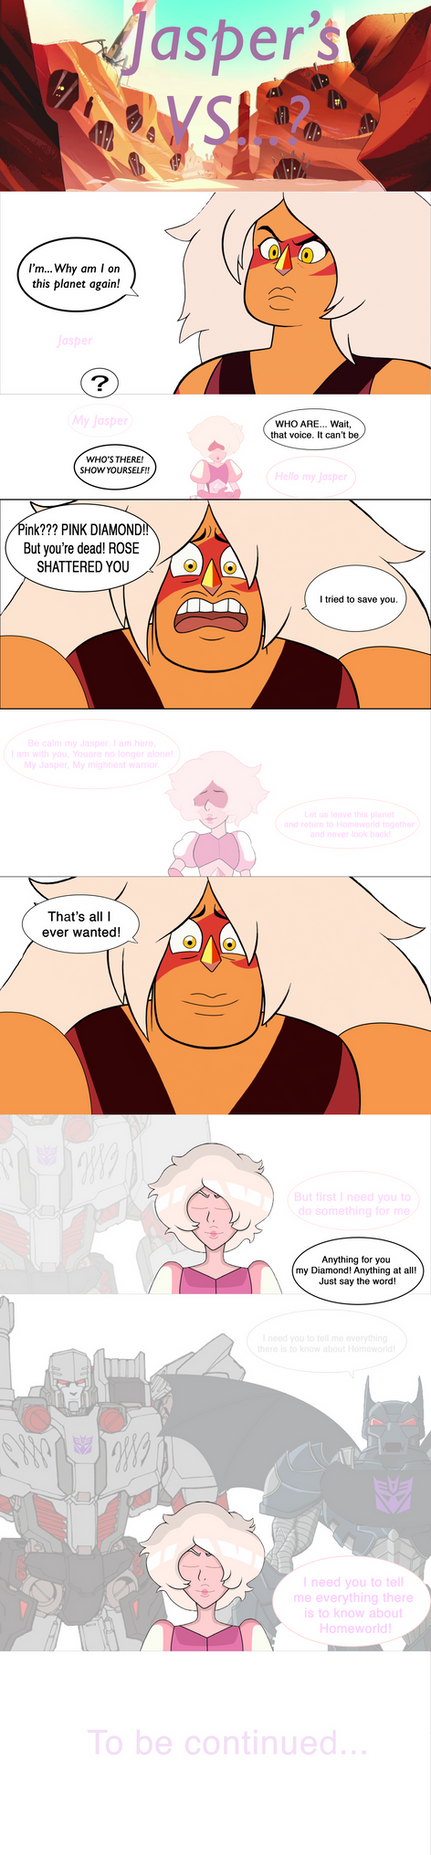 Jasper: Vs Deception